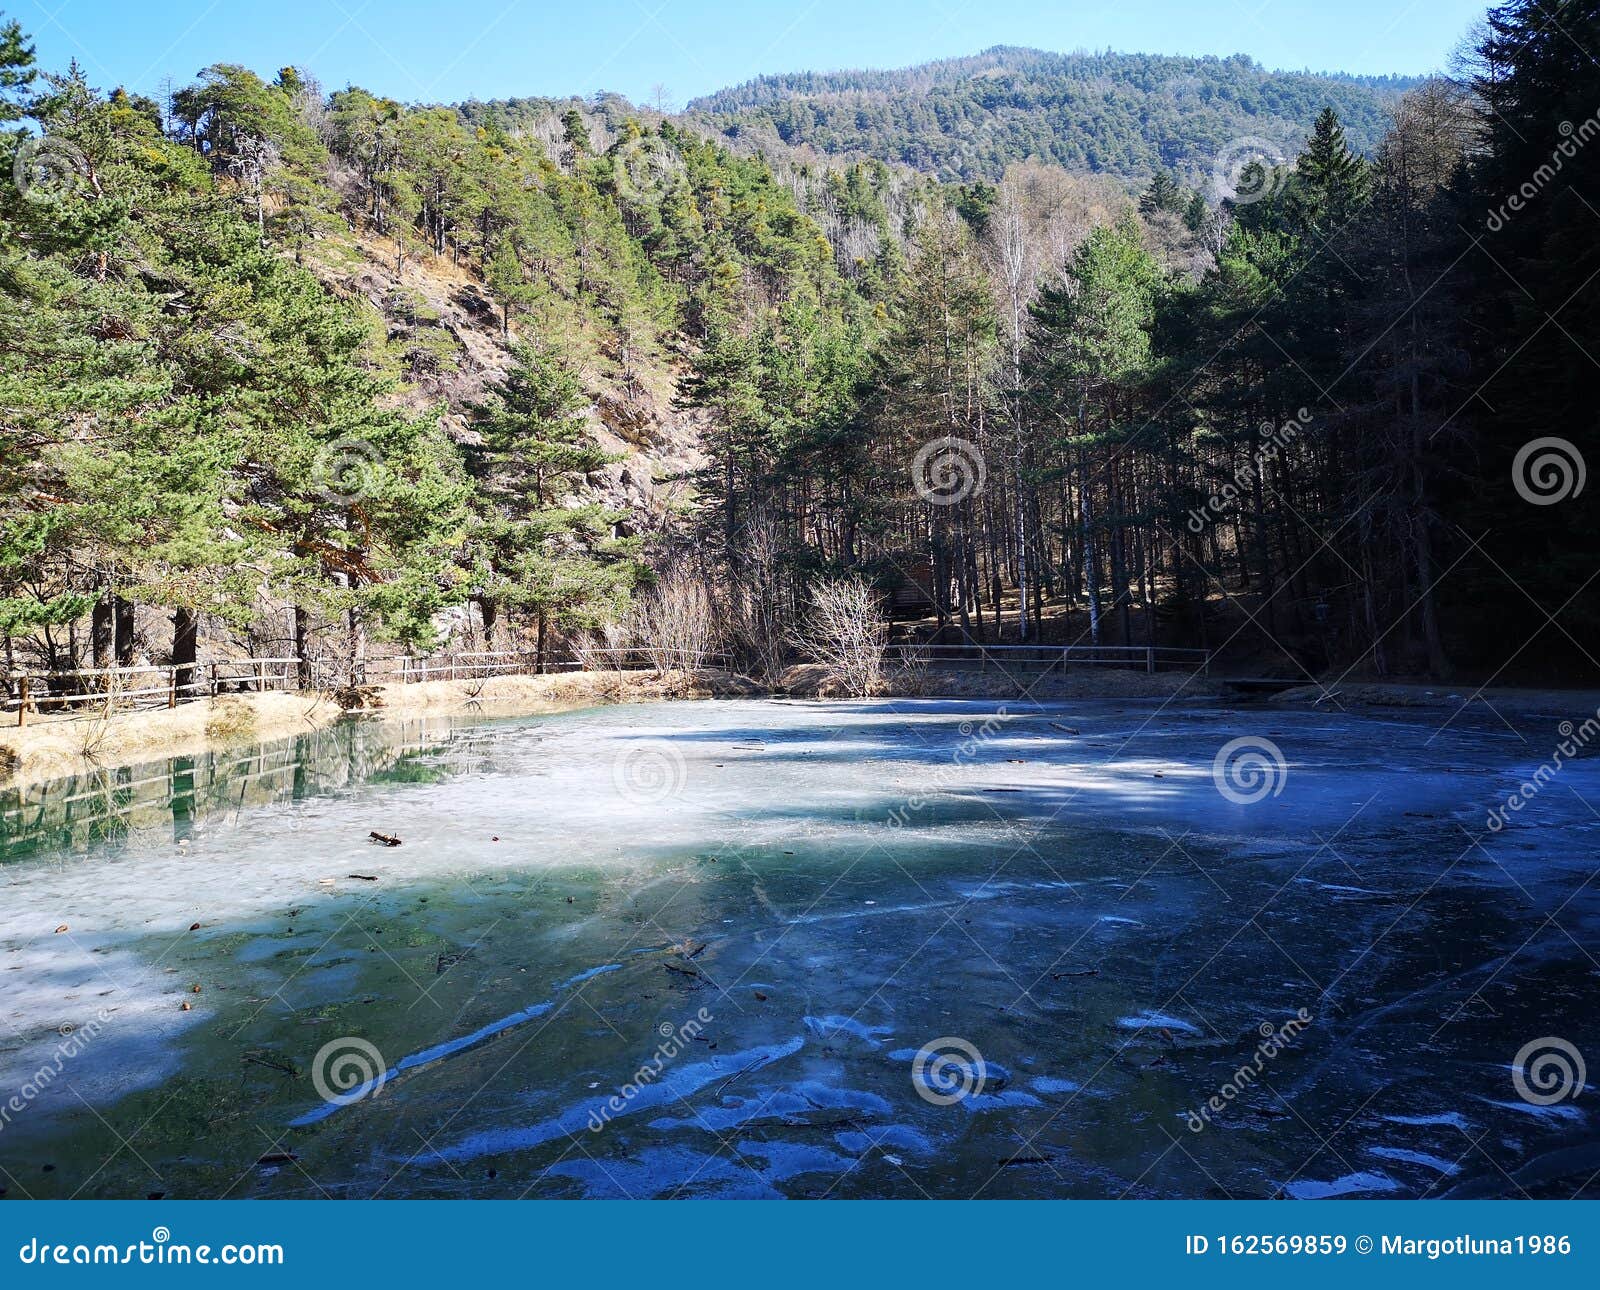 frozen mountain lake in susa valley